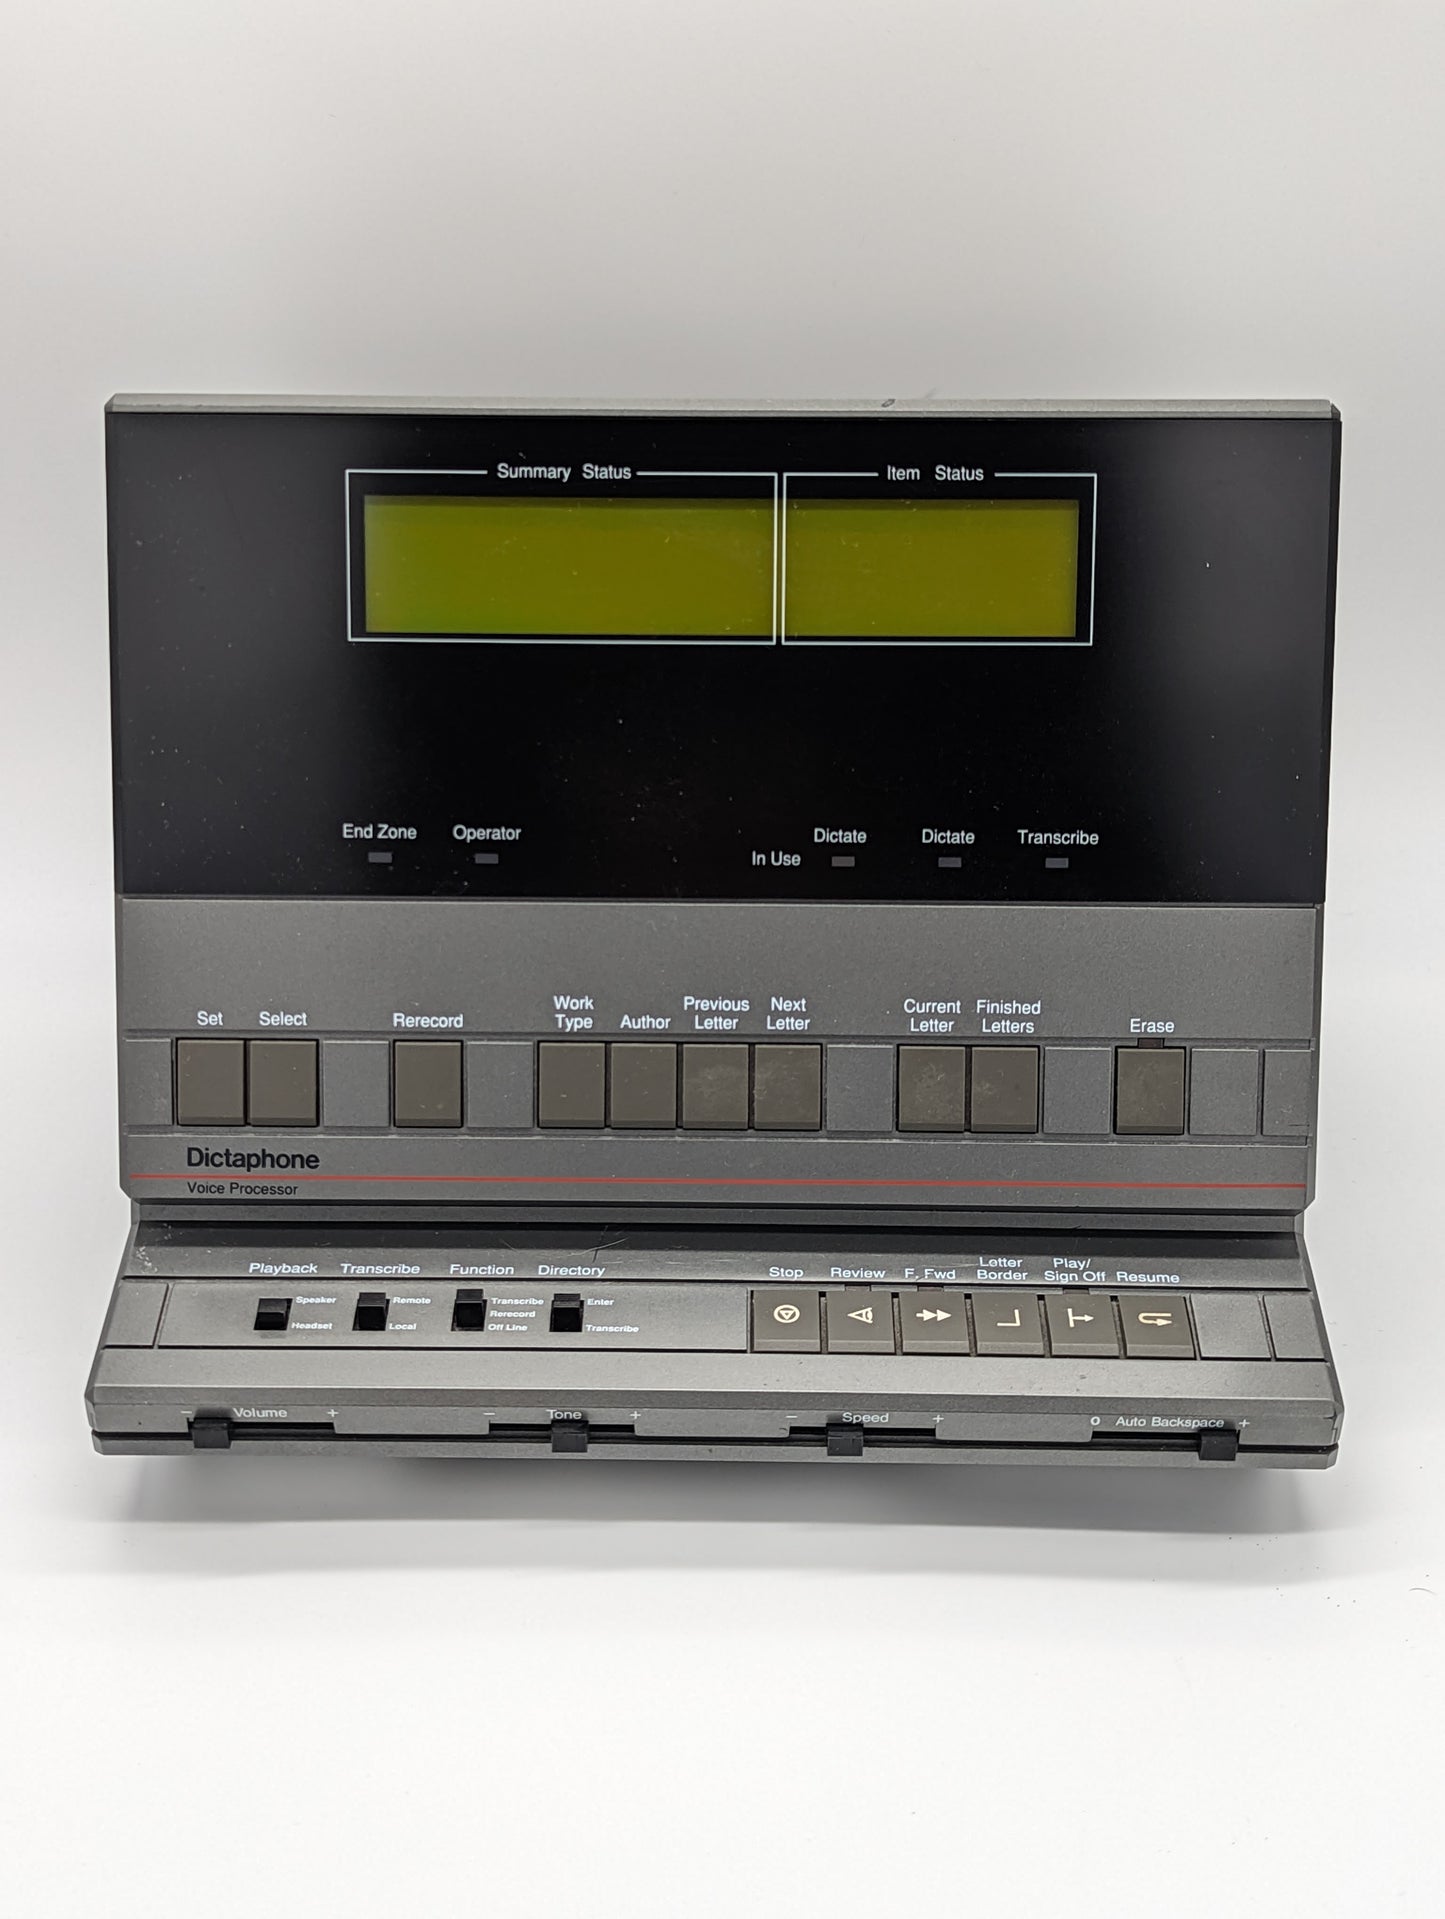 Dictaphone (1980s)